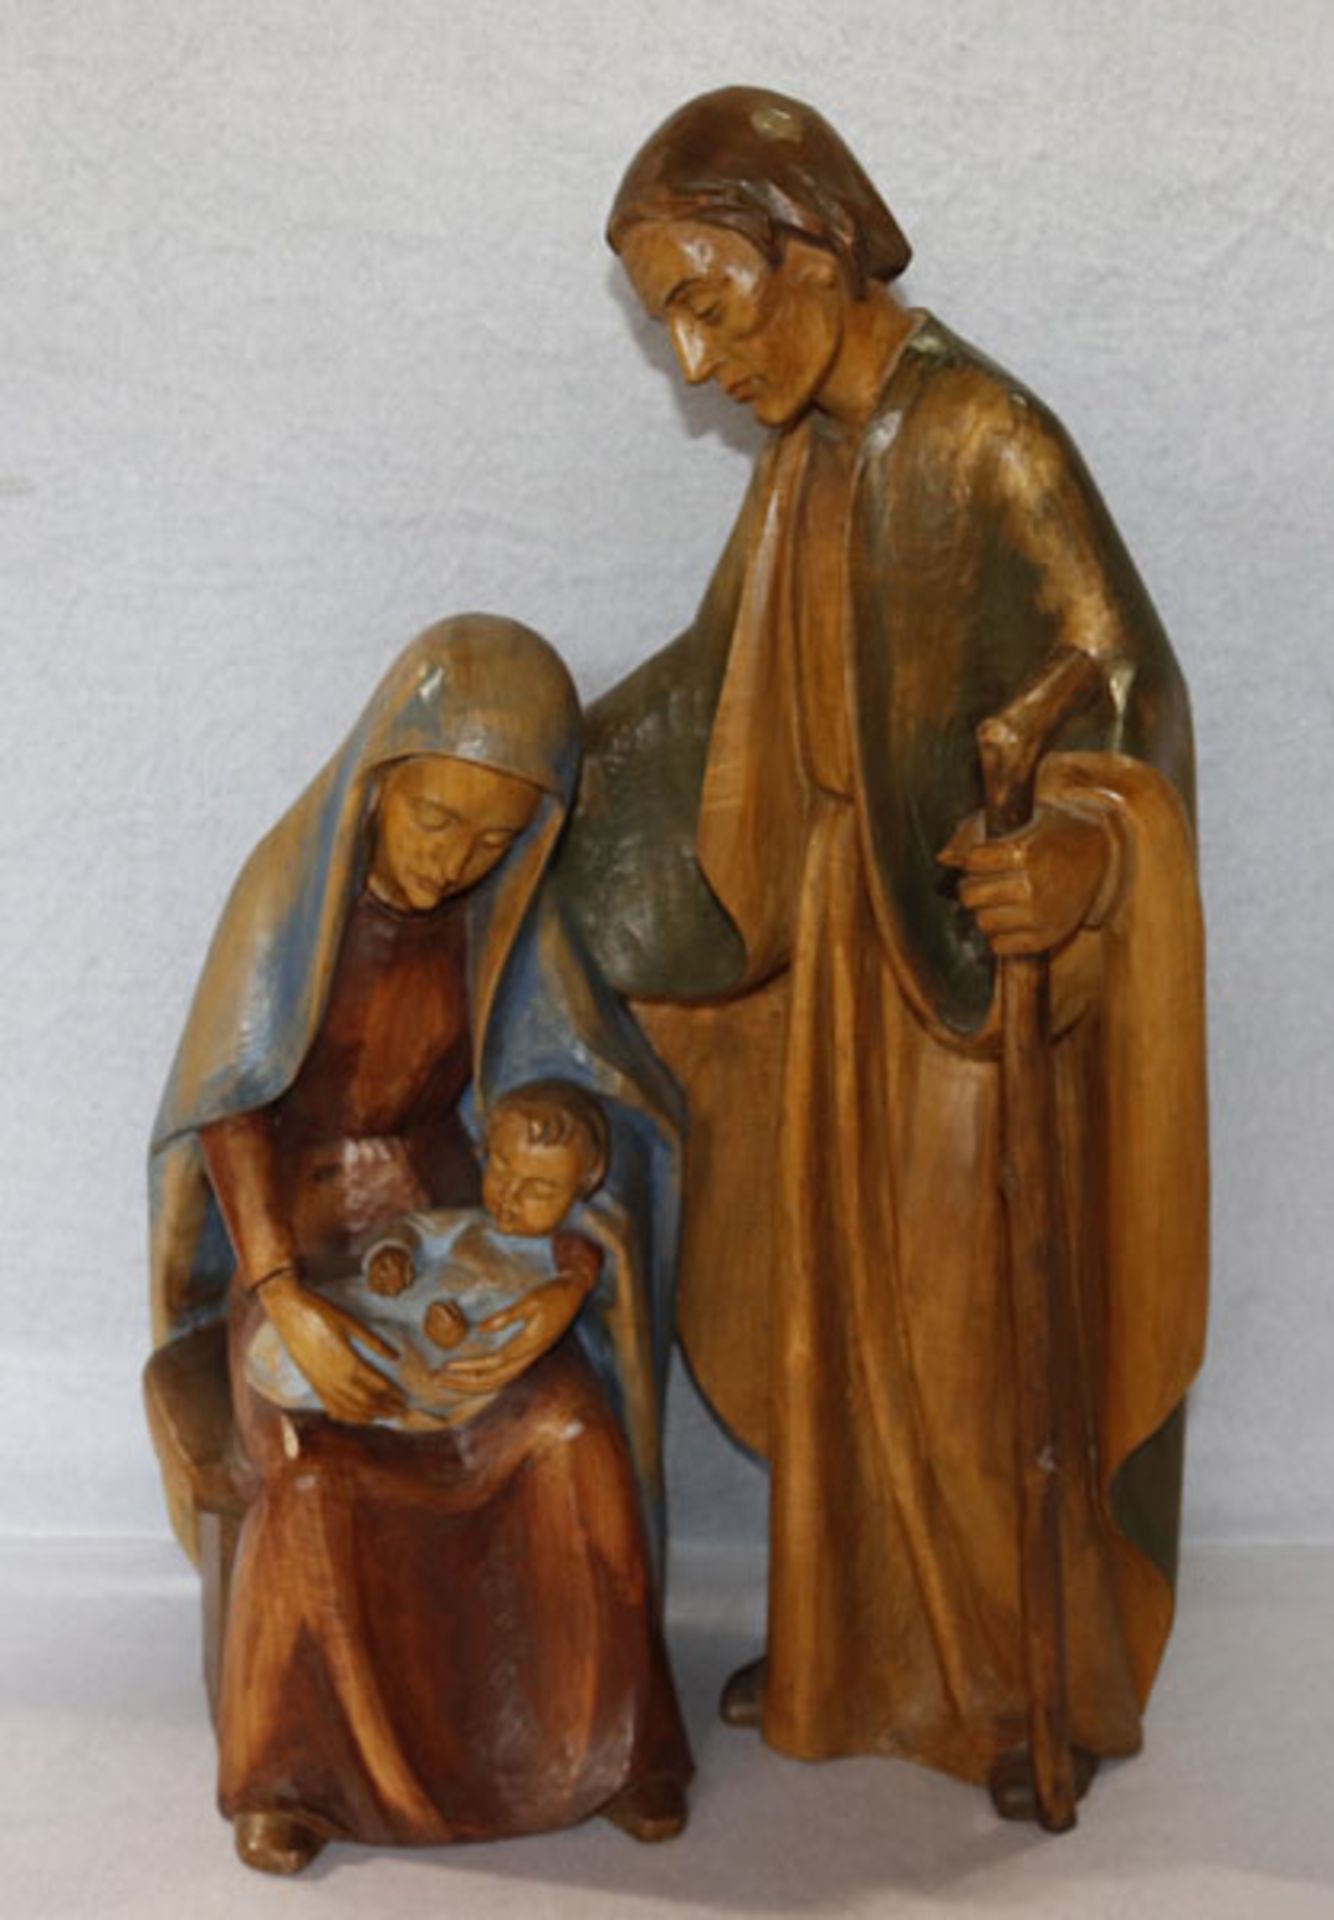 Holz Figurenskulptur 'Heilige Familie - Maria, Josef und Jesuskind', farbig gefaßt, H 61 cm, B 40